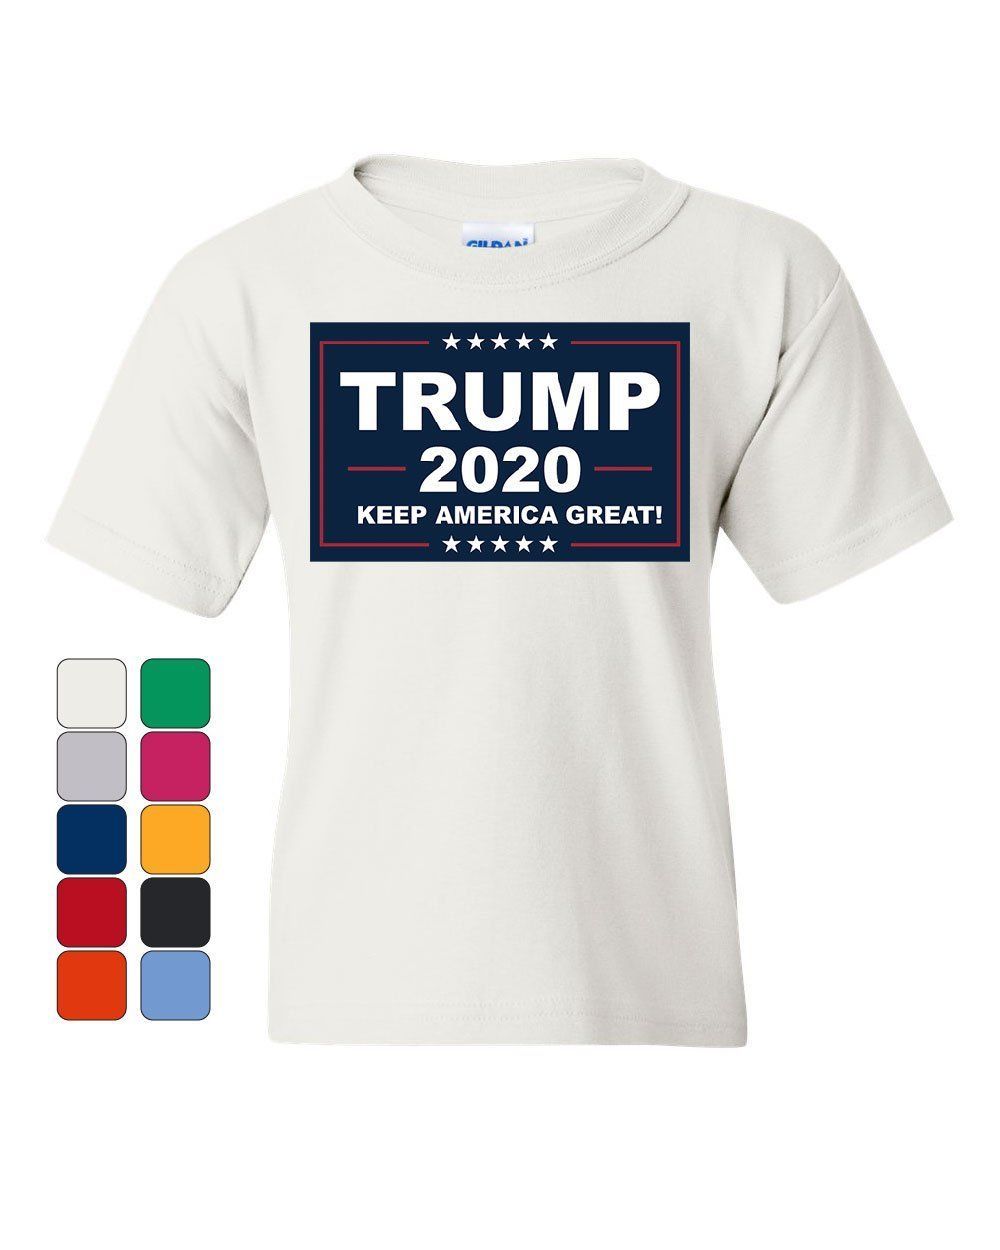 TRUMP 2020 Keep America Great! Youth T-Shirt MAGA Republican Political Kids Tee